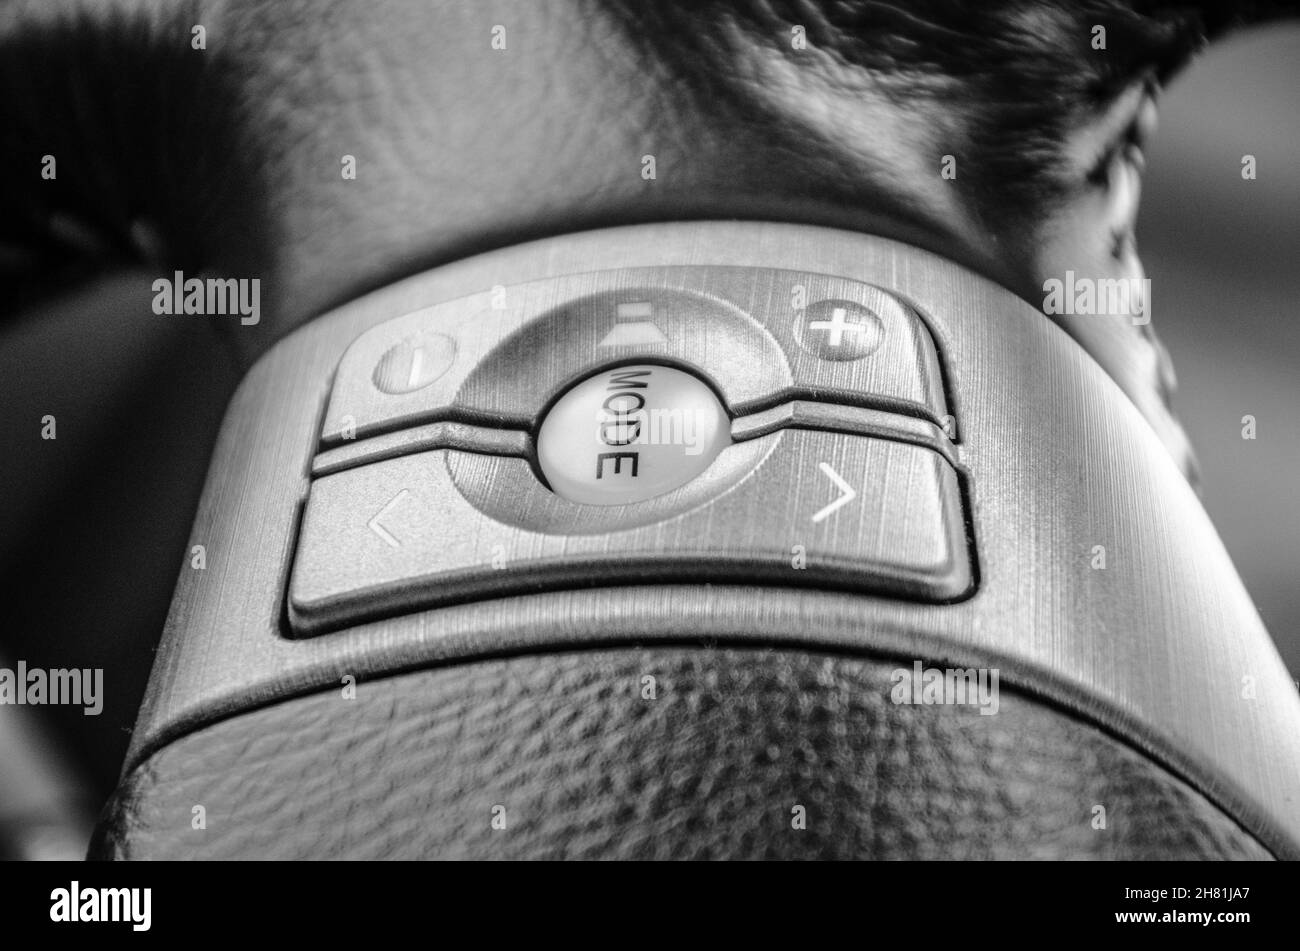 Car audio control buttons Stock Photo